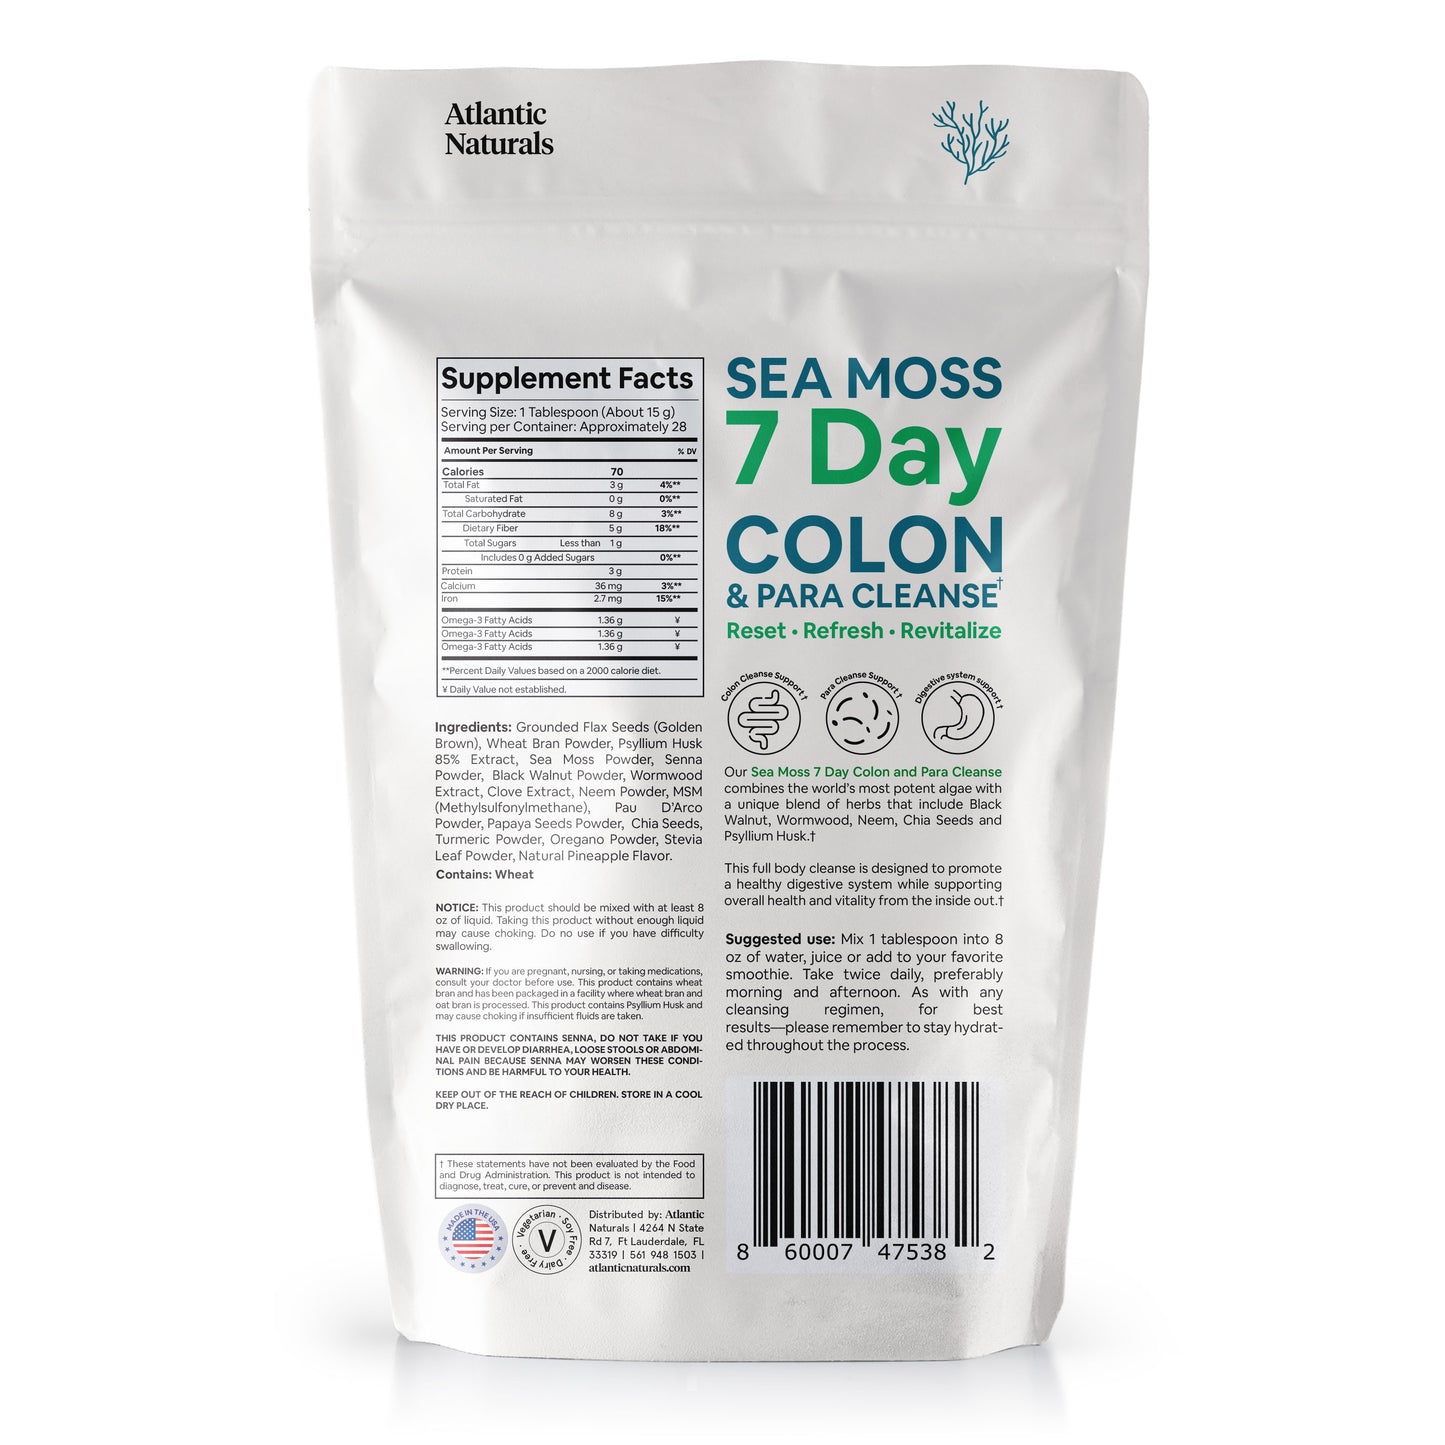 Sea Moss 7 Day Colon & Para Cleanse